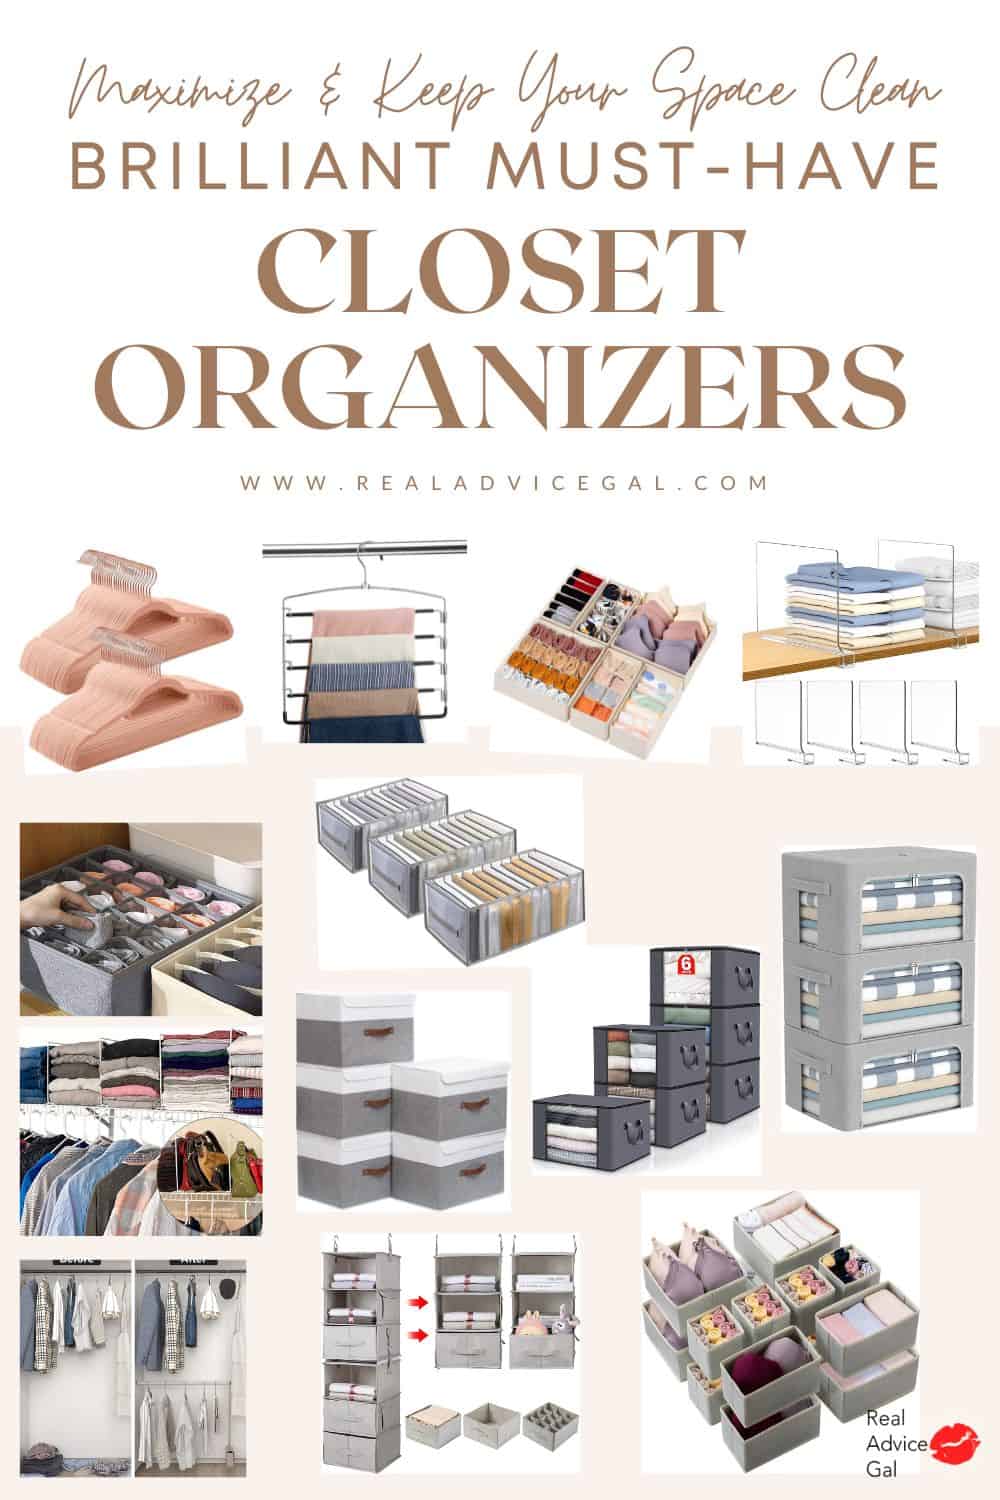 Must-Have closet organizers